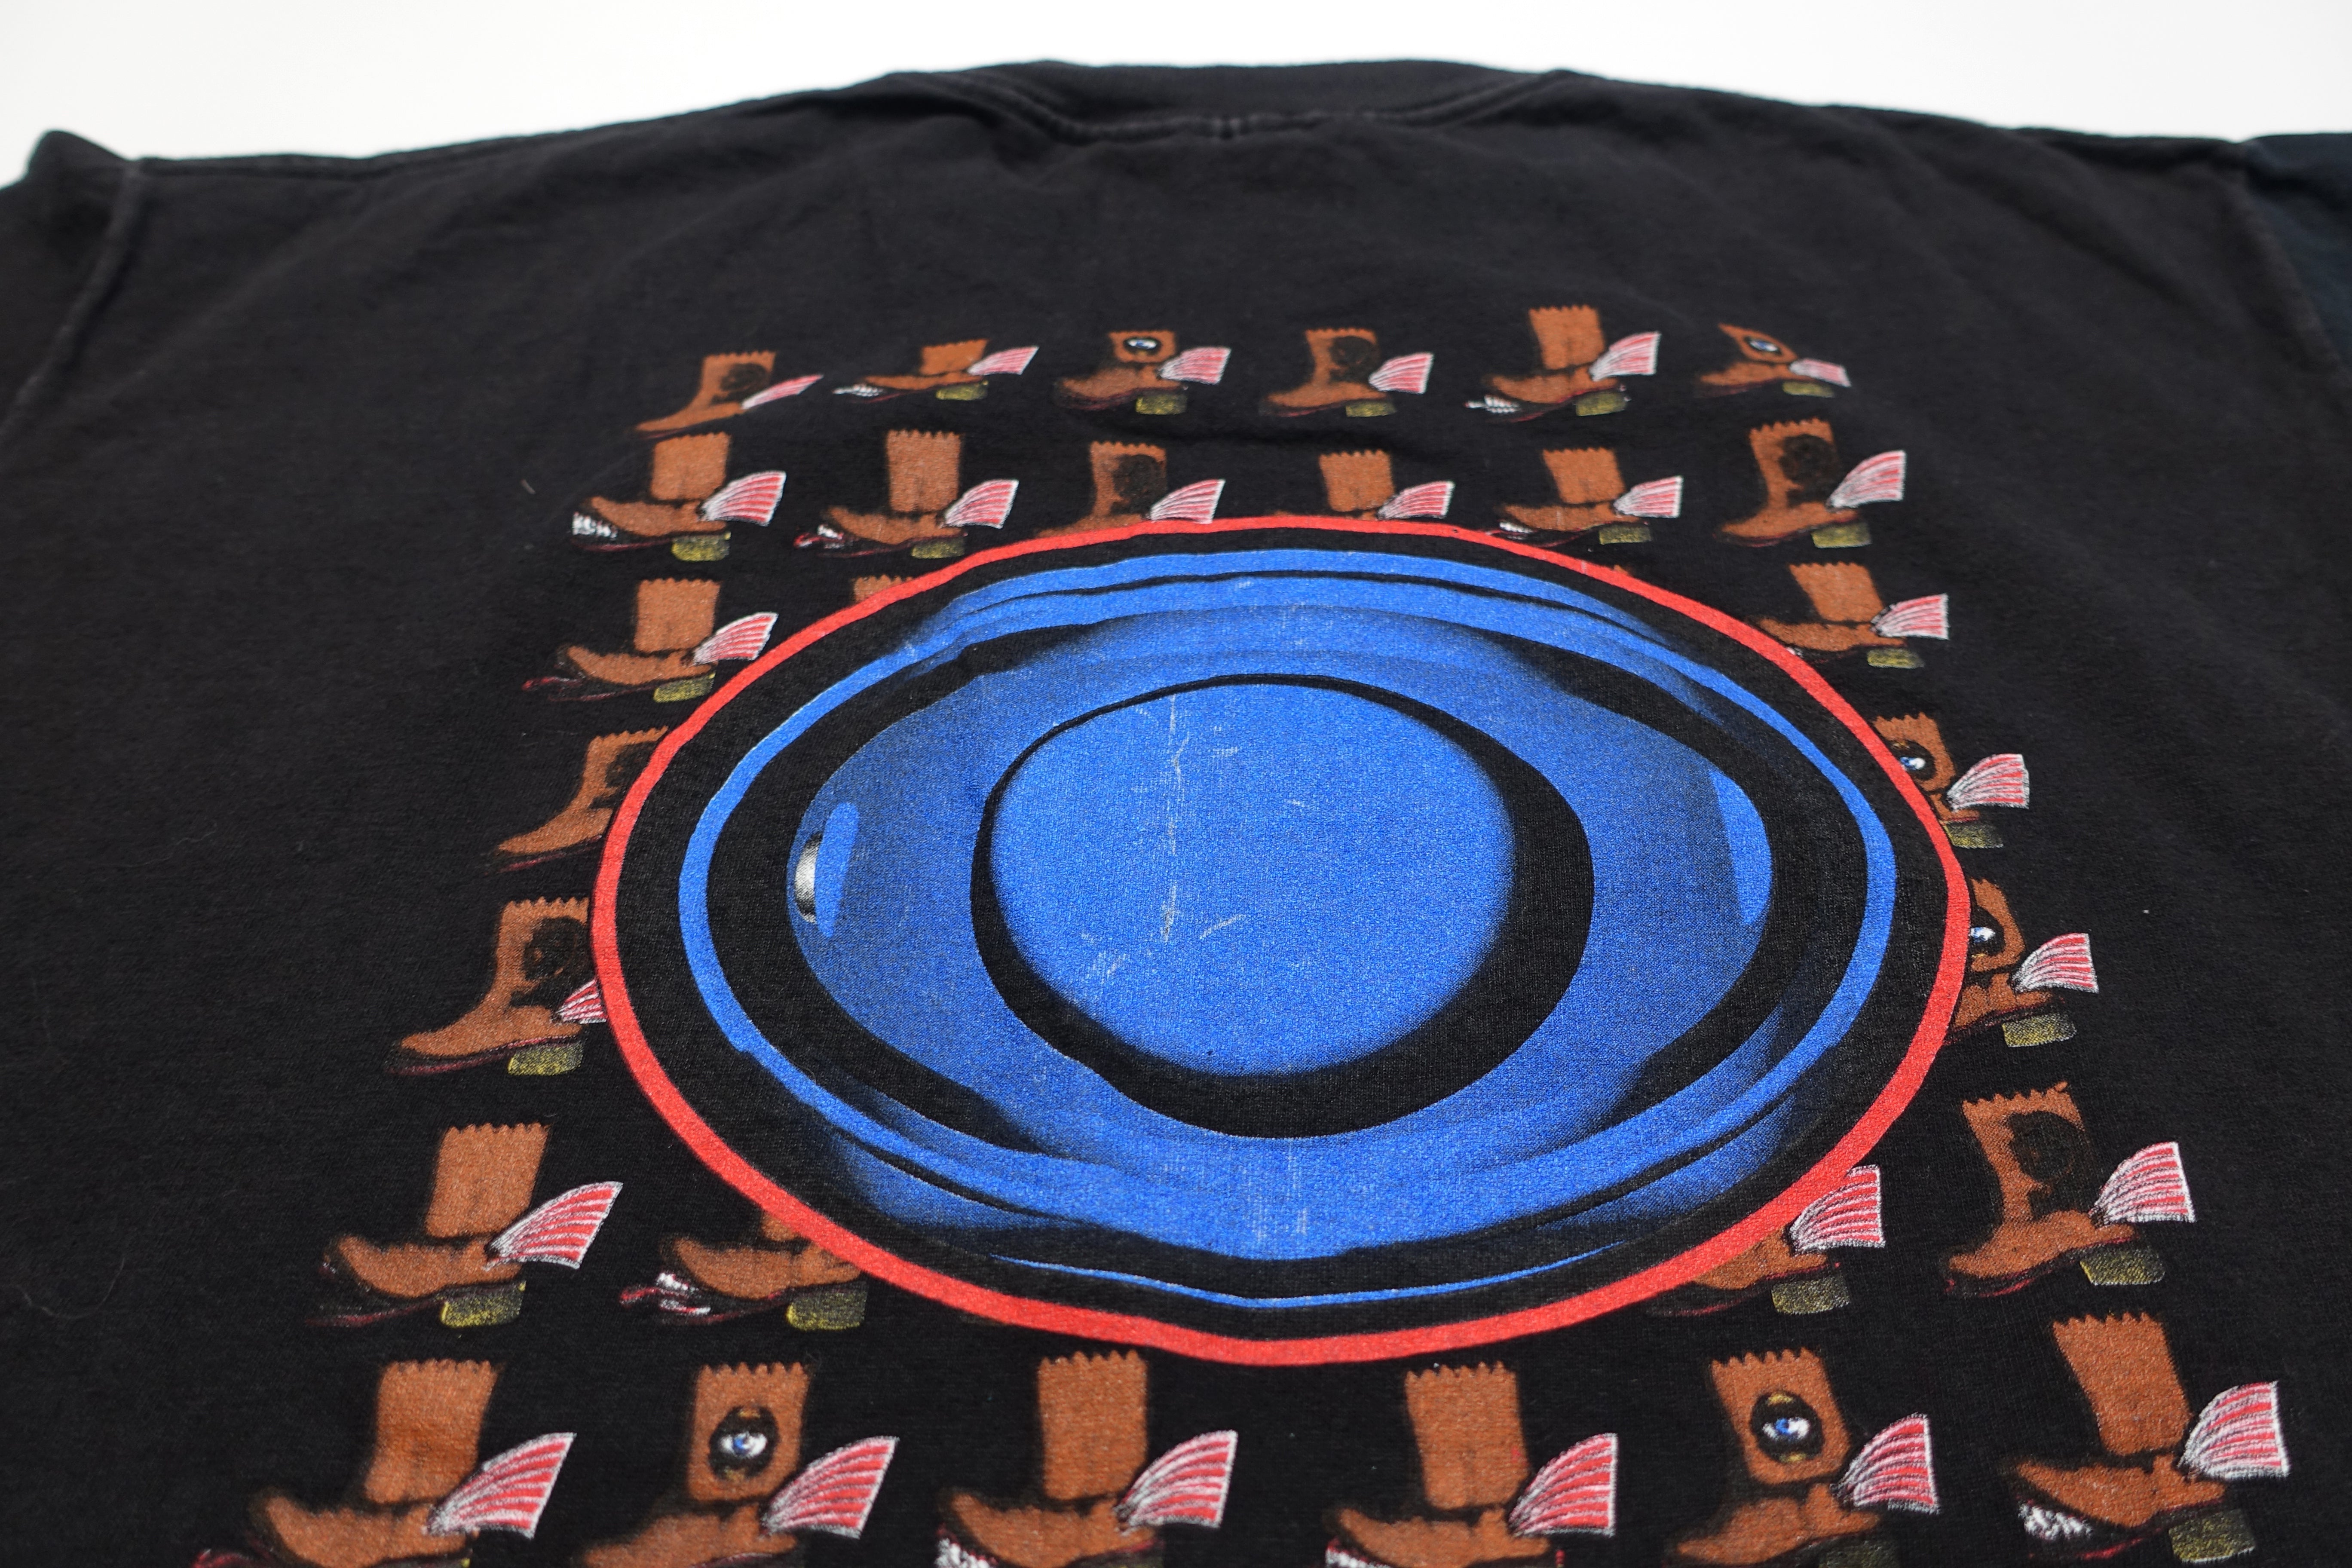 Raging Slab ‎– Dynamite Monster Boogie Concert 1993 Tour Shirt Size XL